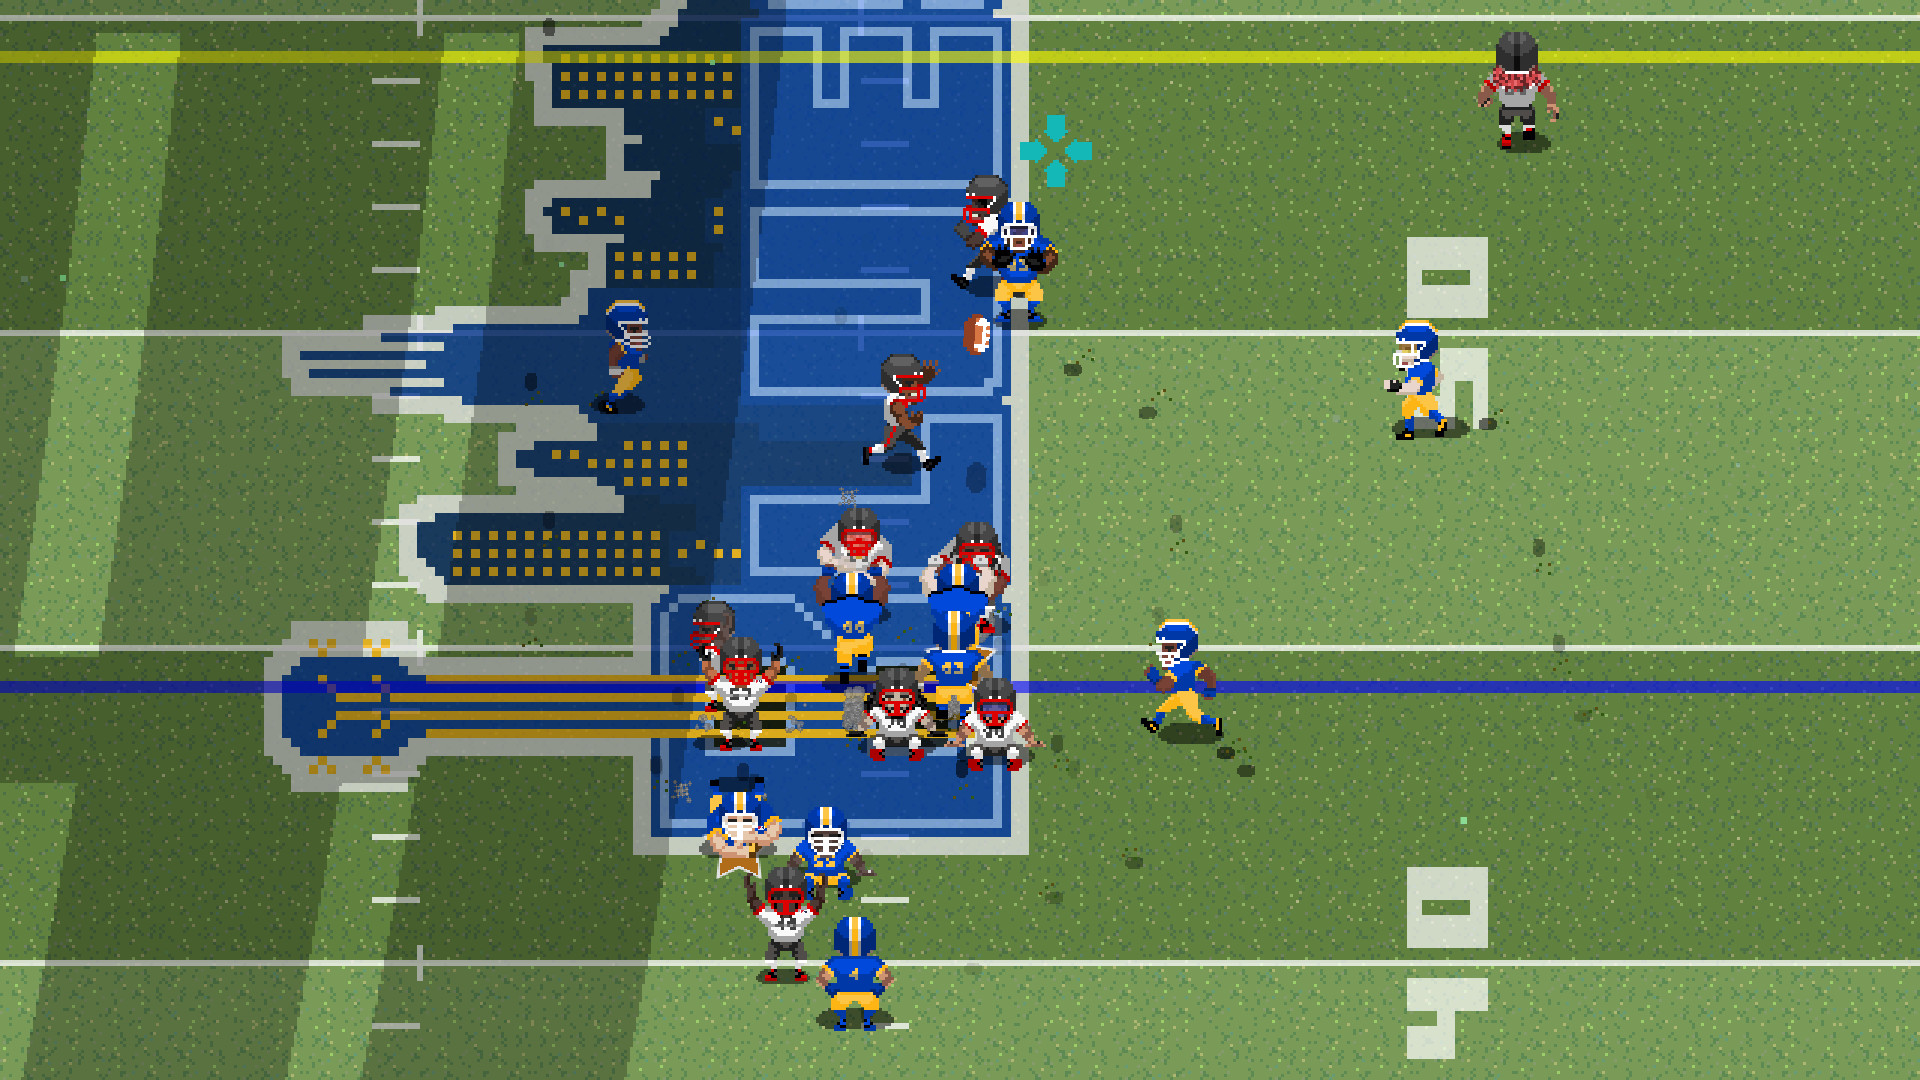 Legend Bowl Kickoff Version Full Game Free Download